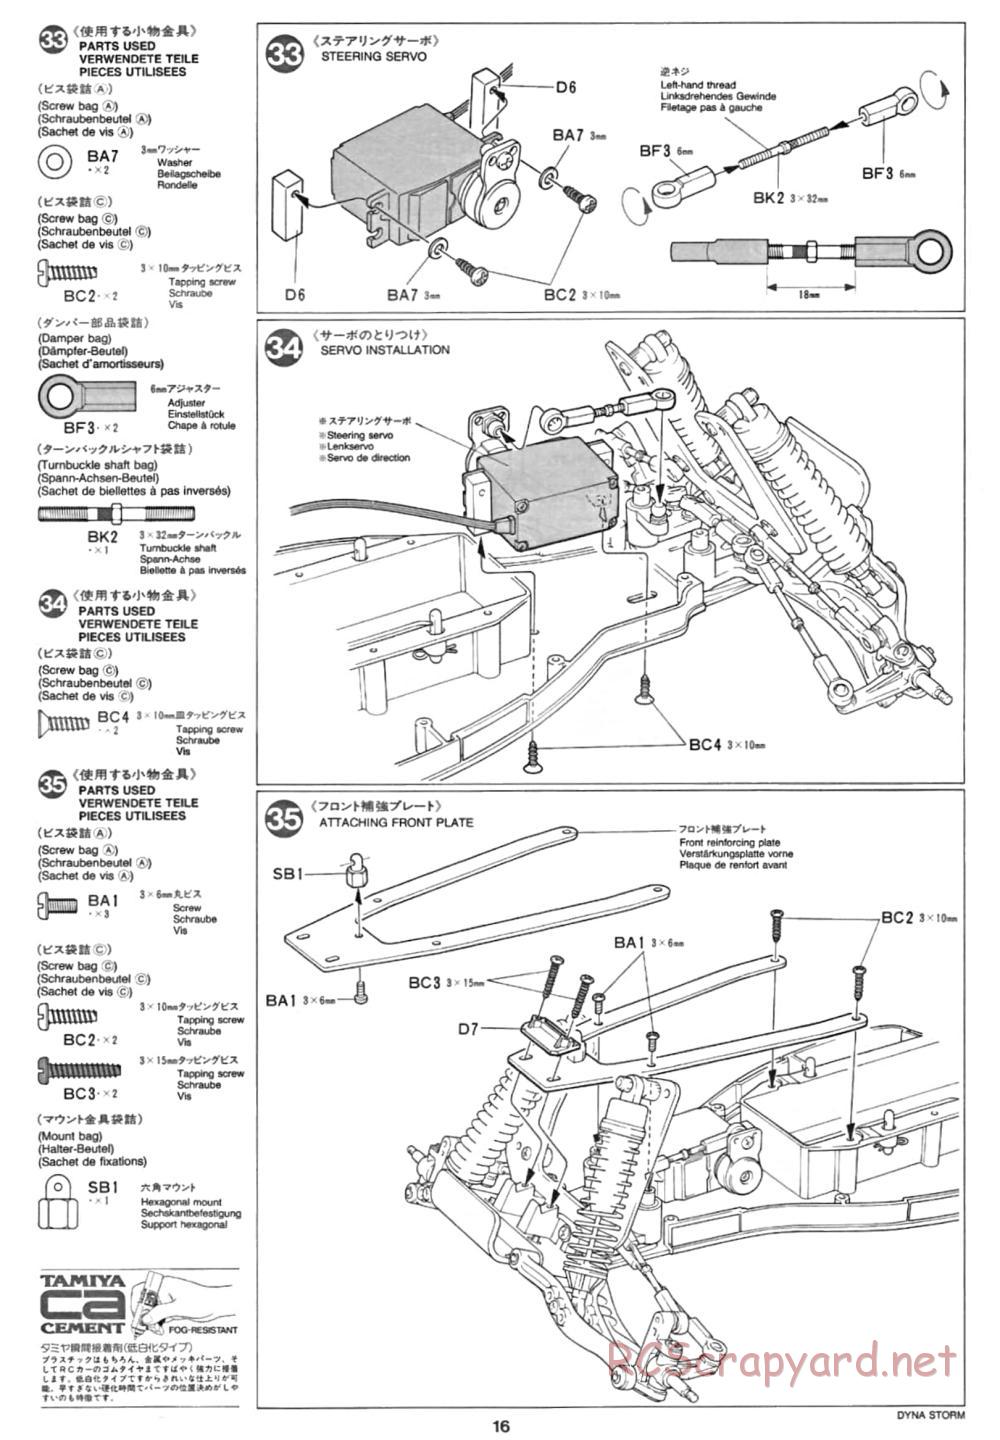 Tamiya - Dyna Storm Chassis - Manual - Page 16